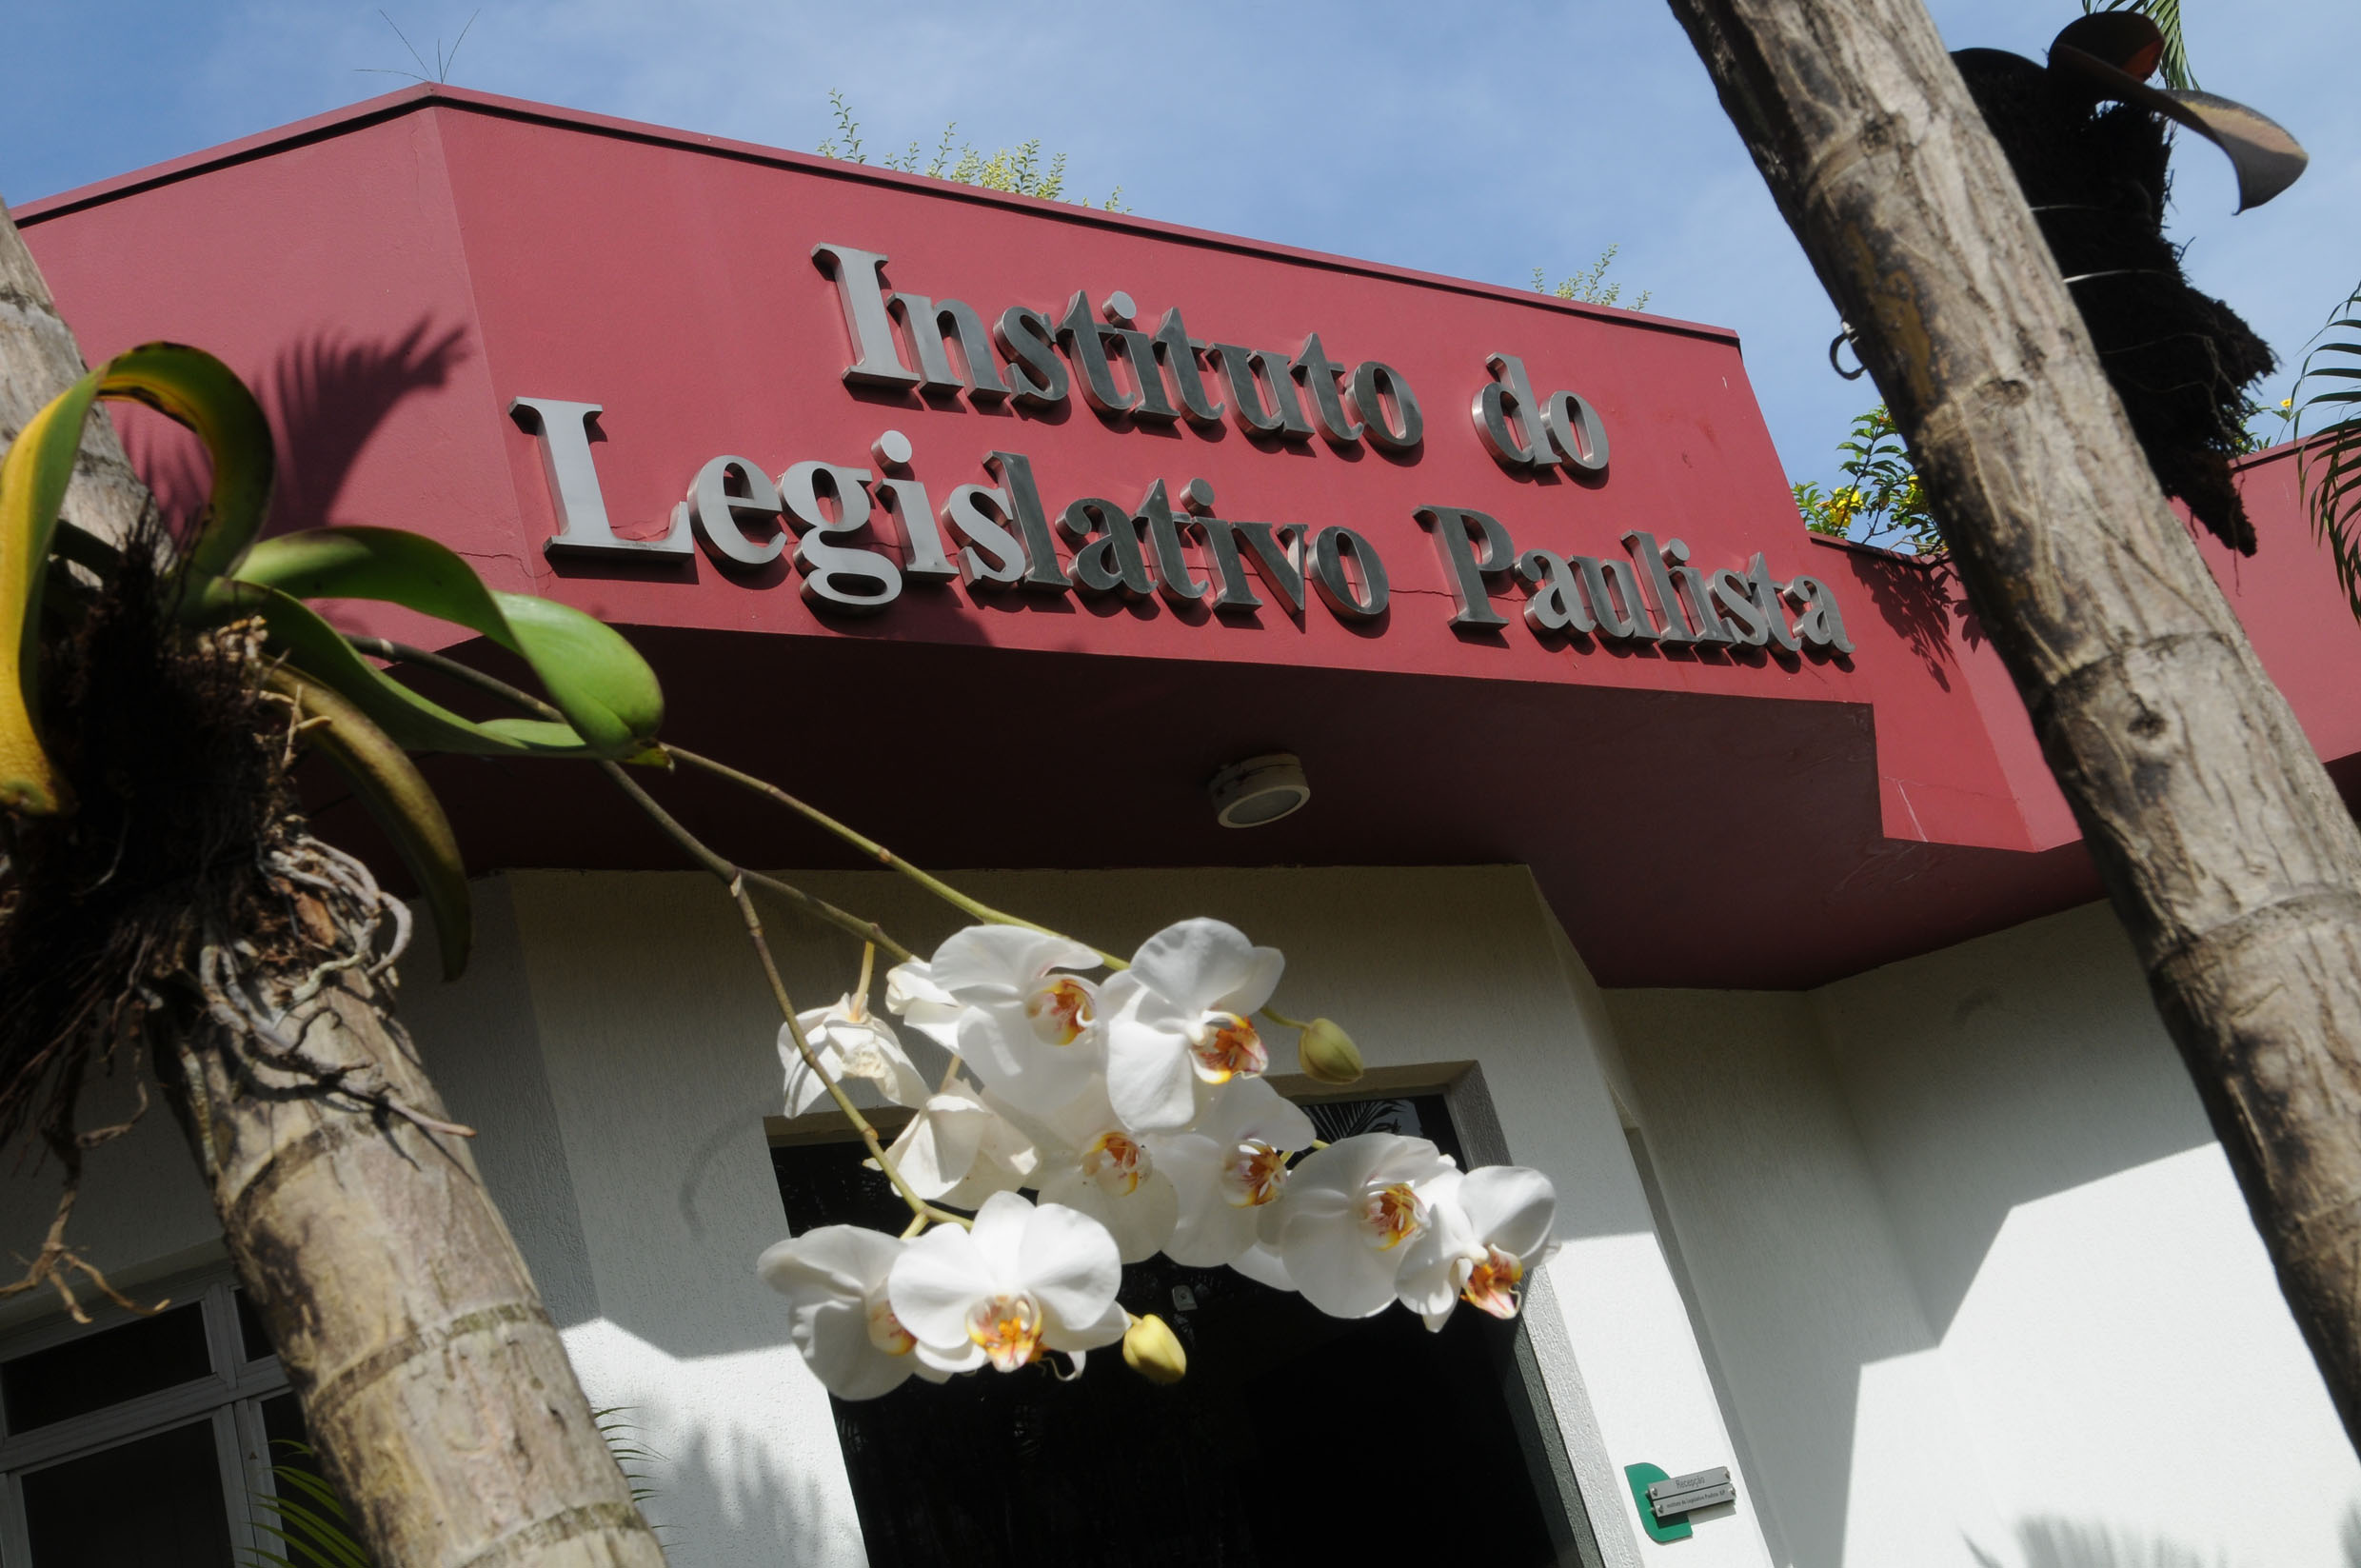 Entrada do Instituto Legislativo<a style='float:right;color:#ccc' href='https://www3.al.sp.gov.br/repositorio/noticia/N-02-2014/fg158639.jpg' target=_blank><i class='bi bi-zoom-in'></i> Clique para ver a imagem </a>